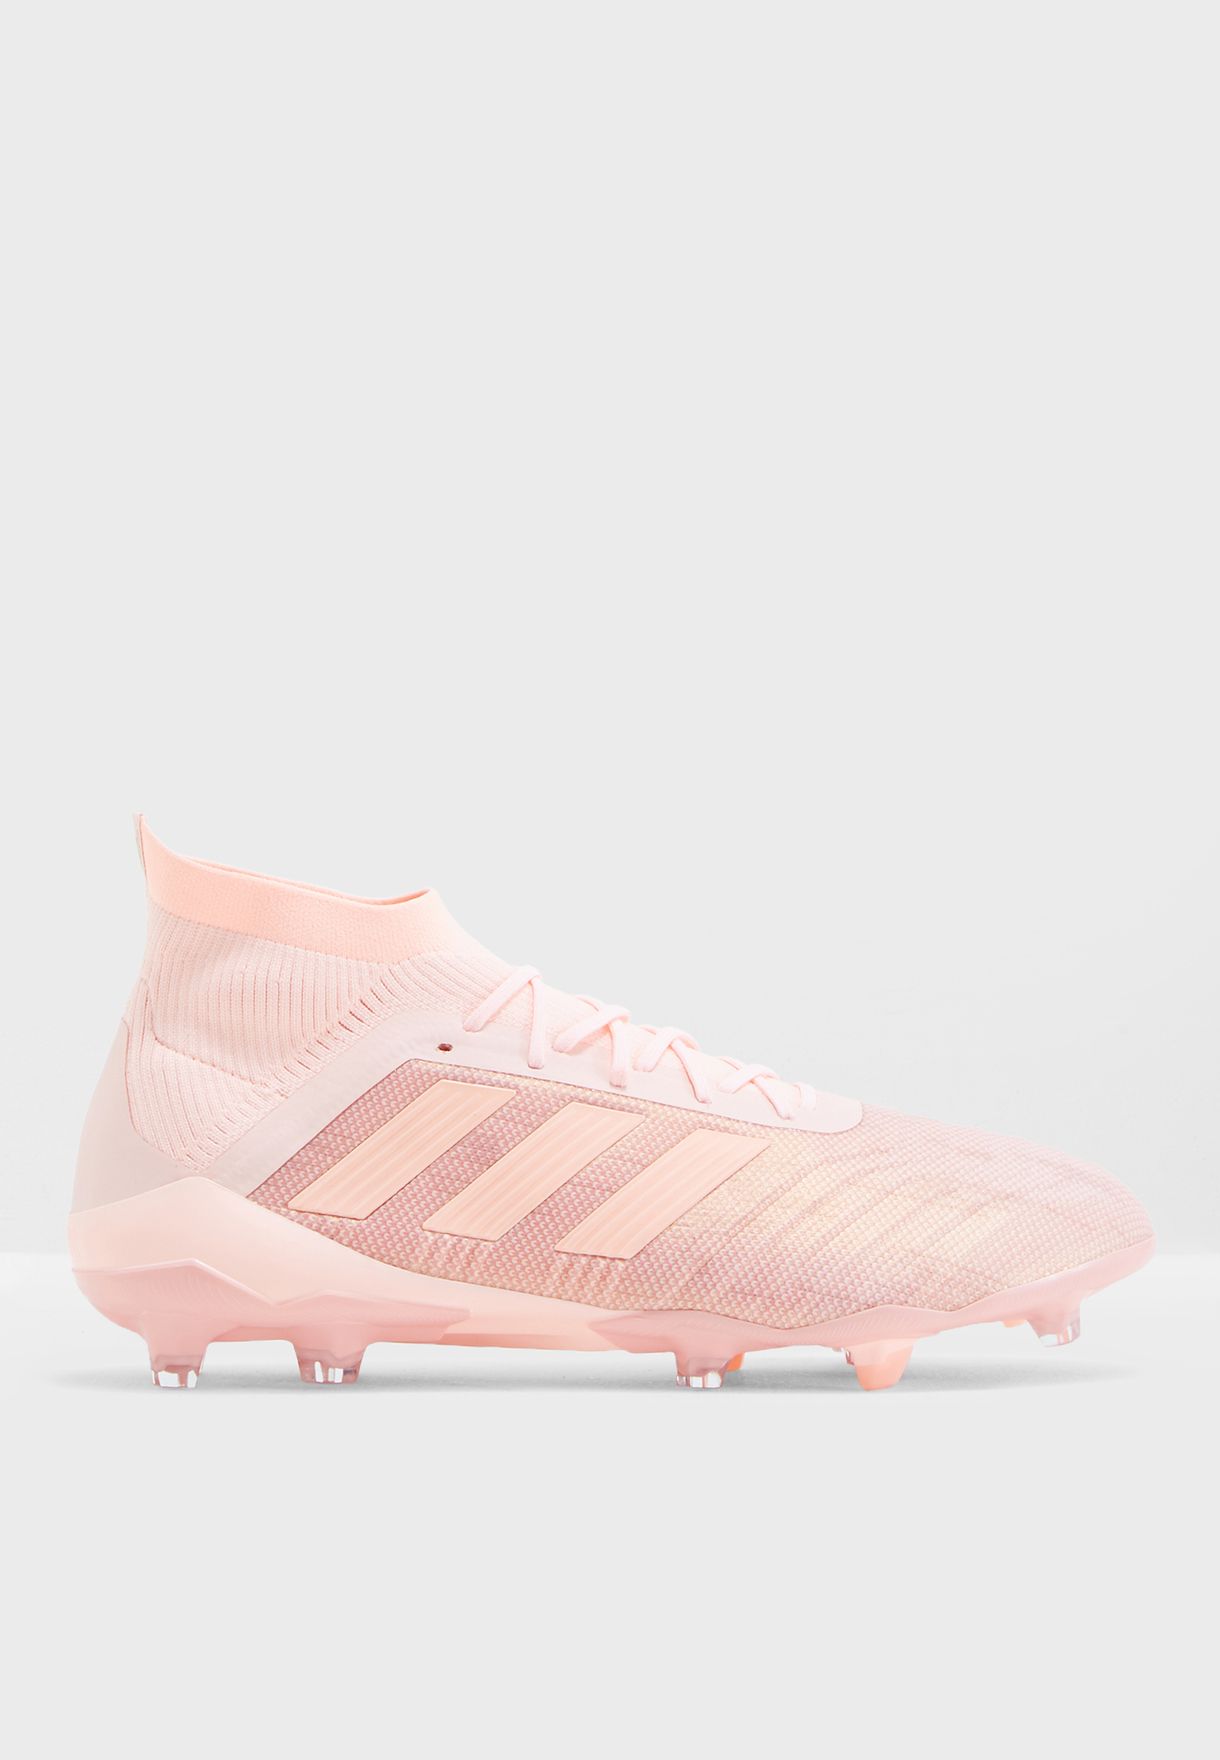 adidas 18.1 predator pink